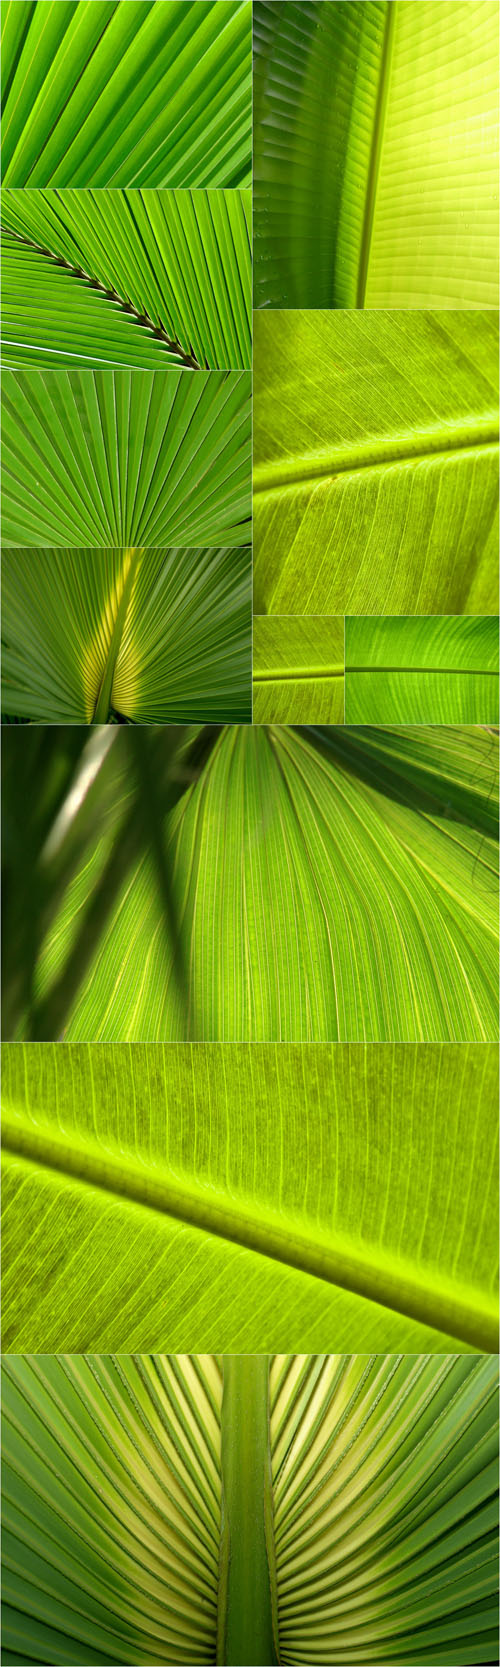 Palm Leaf Backgrounds